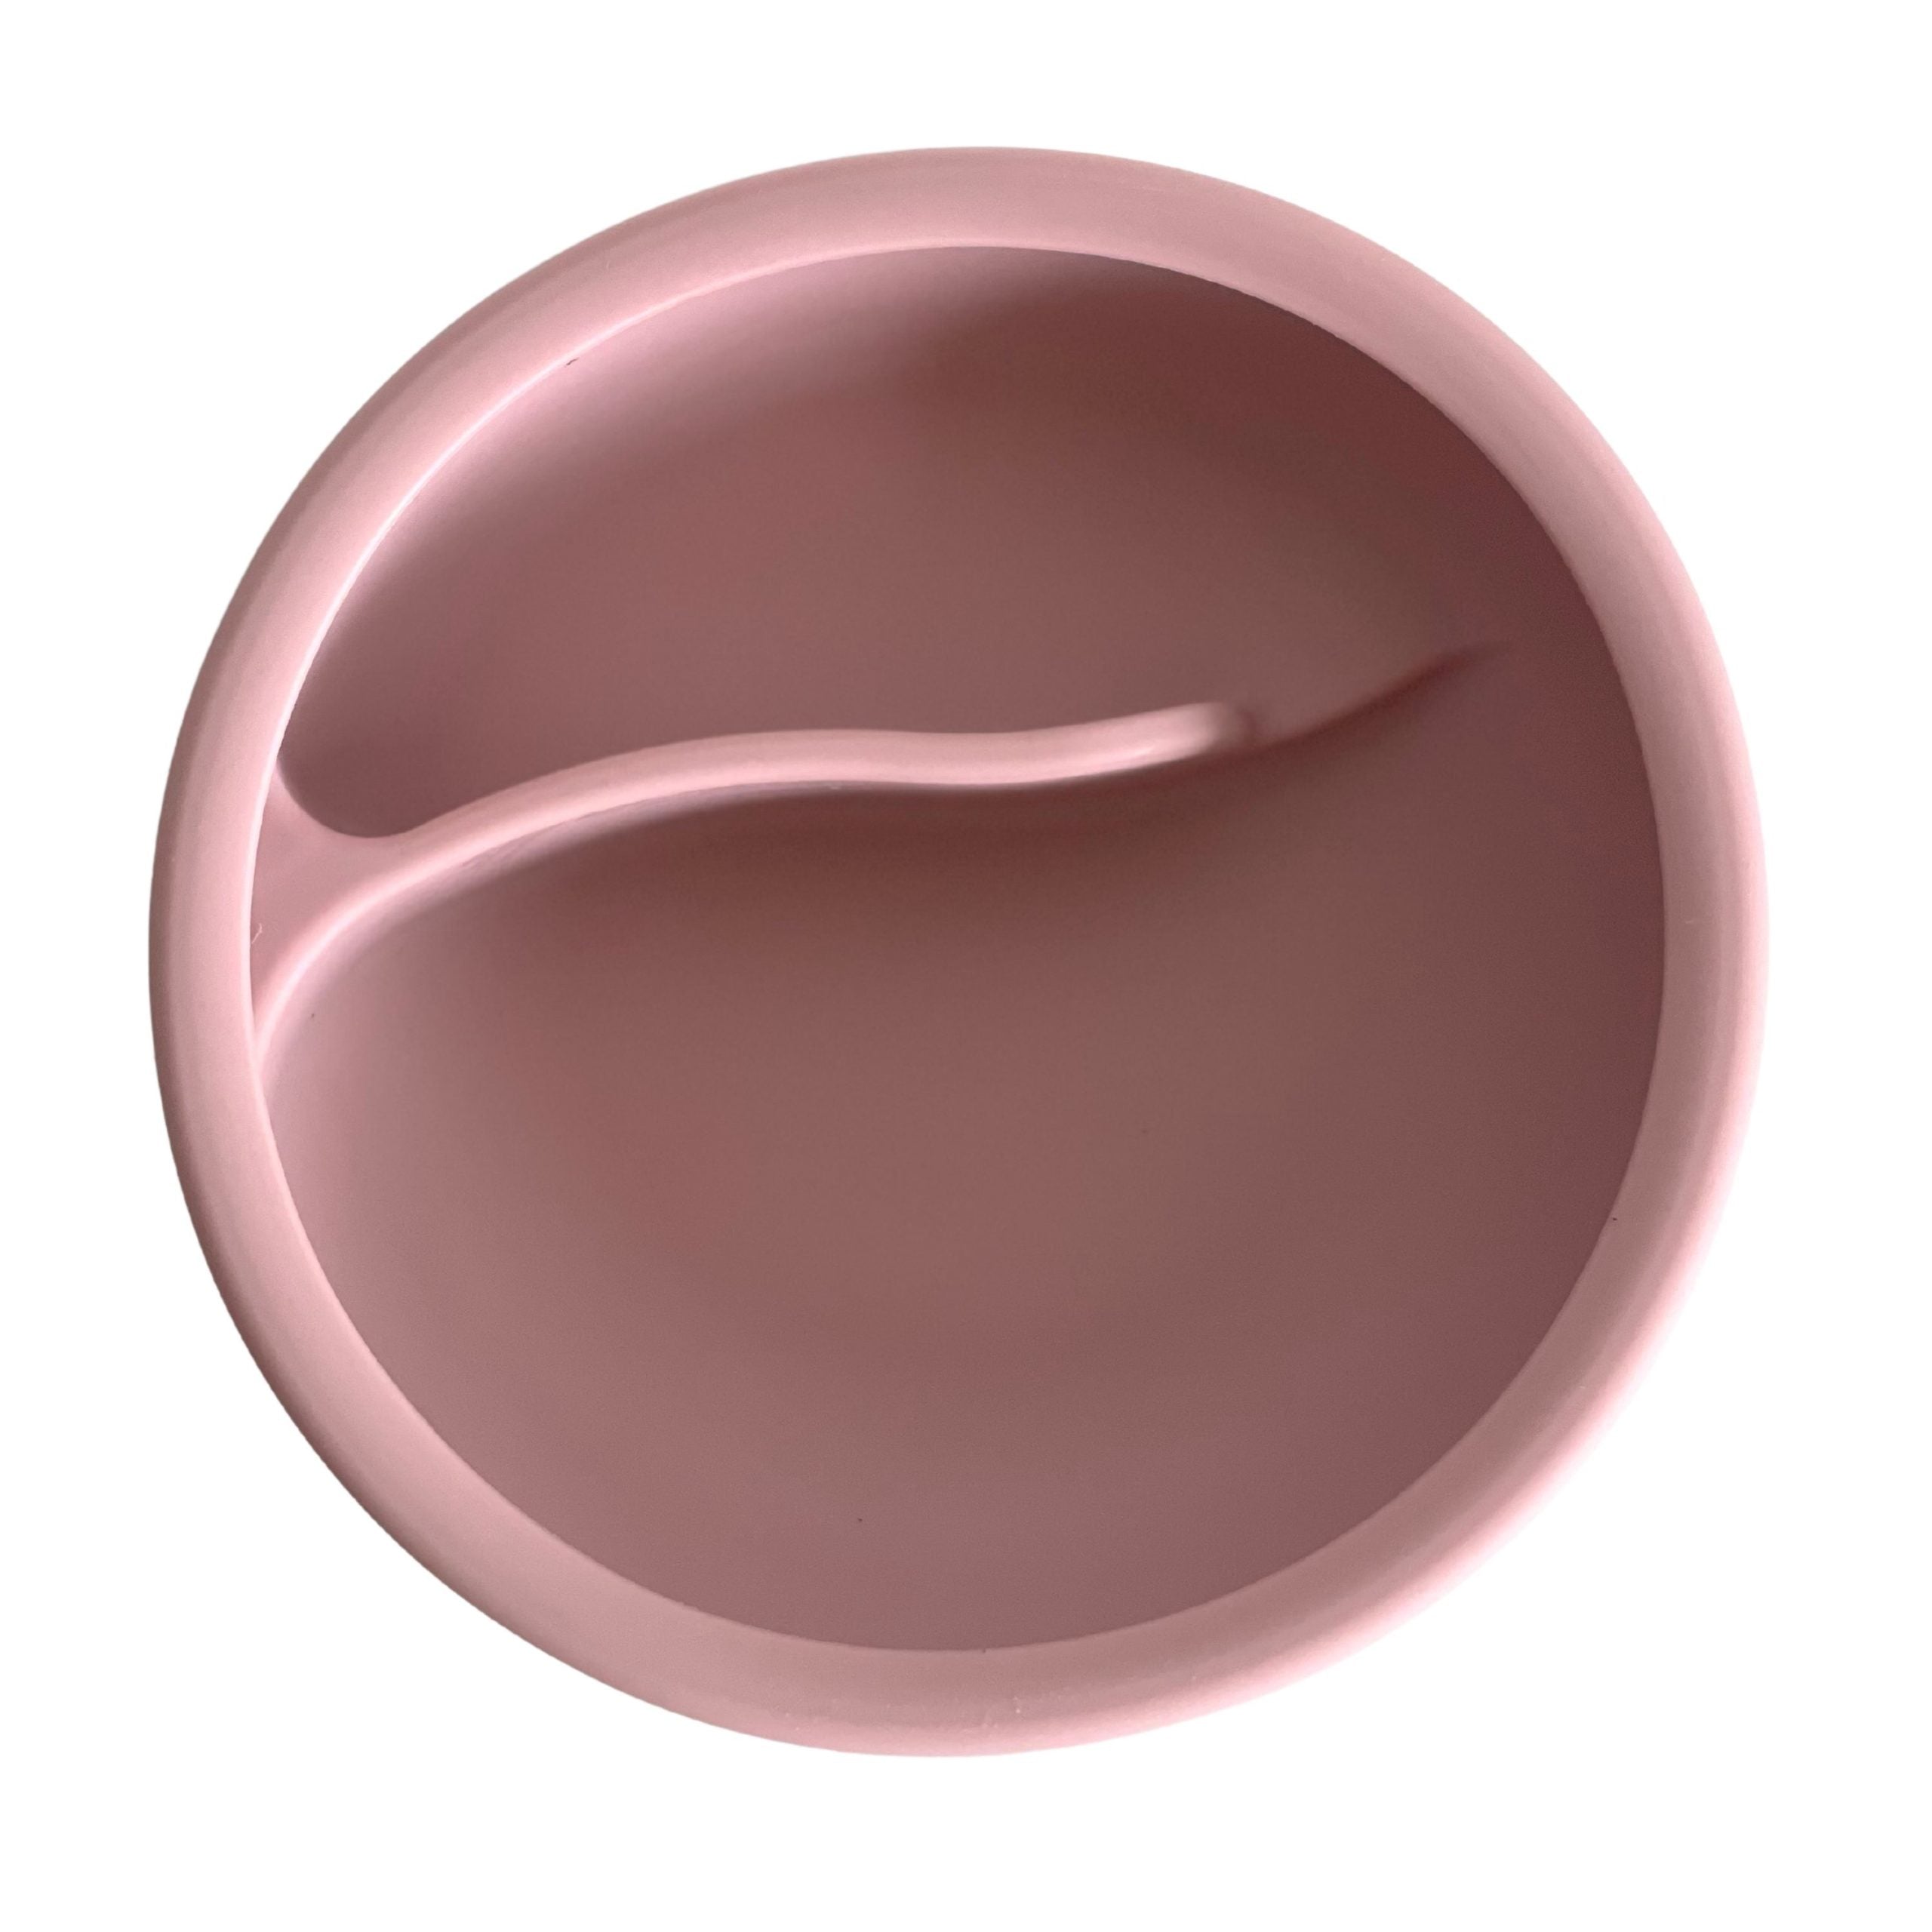 Smoosh Divider Bowl Pink - Tiny Tots Baby Store 